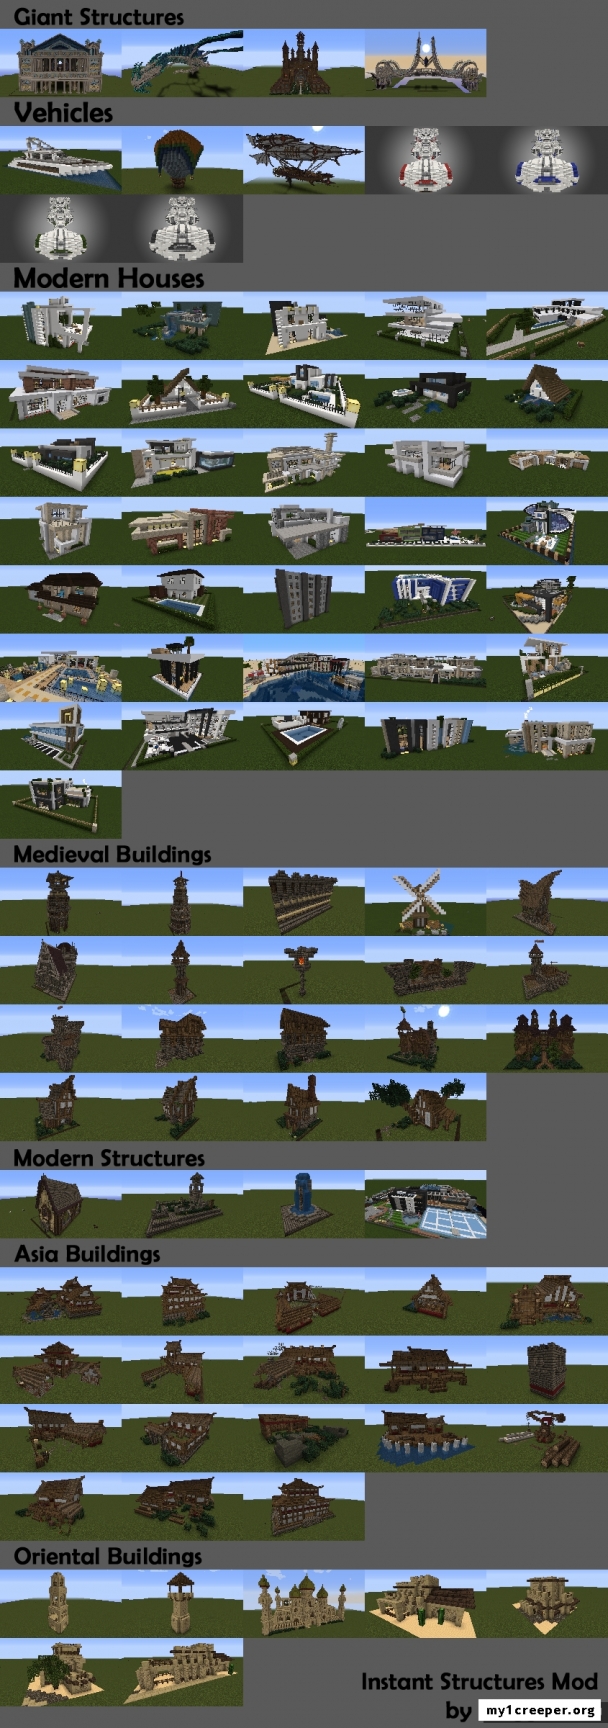 Мод instant structures by maggicraft для майнкрафт 1.7.10. Скриншот №1